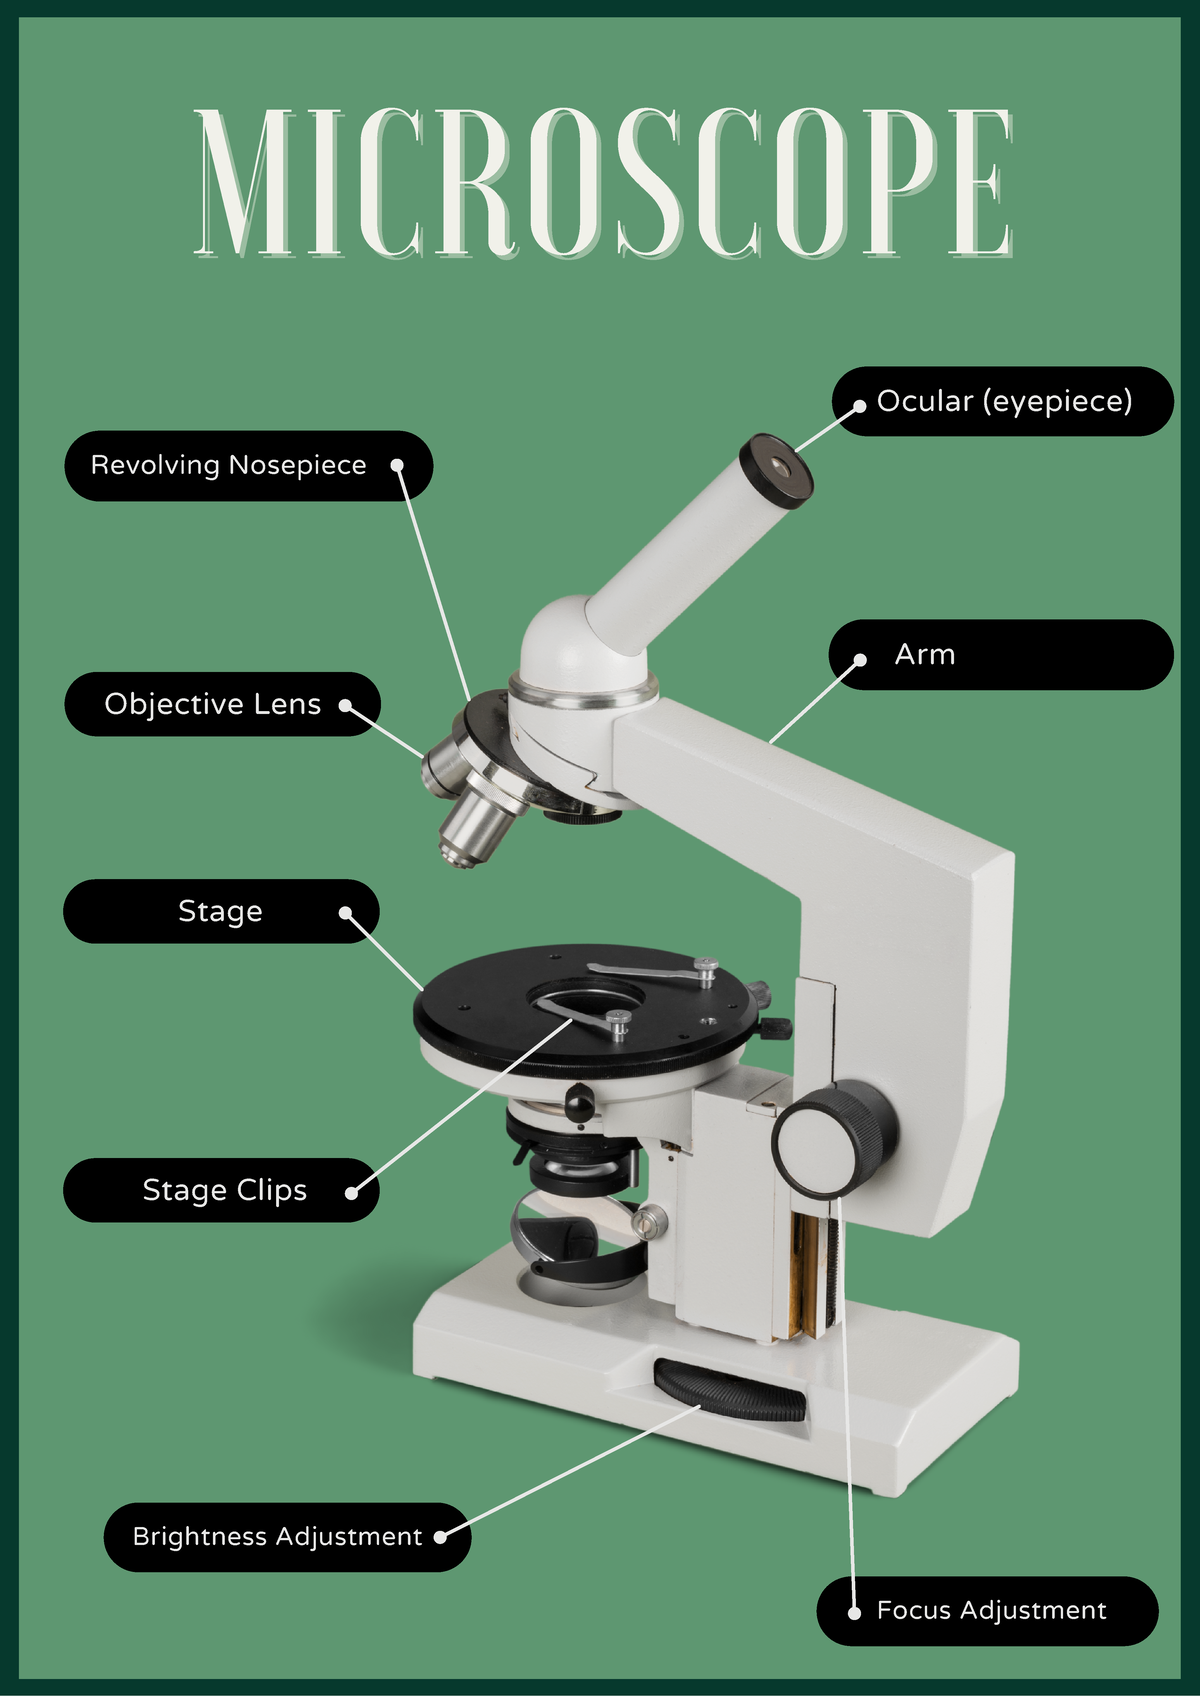 Microscope notes - MICROSCOPE Ocular (eyepiece) Revolving Nosepiece Arm ...